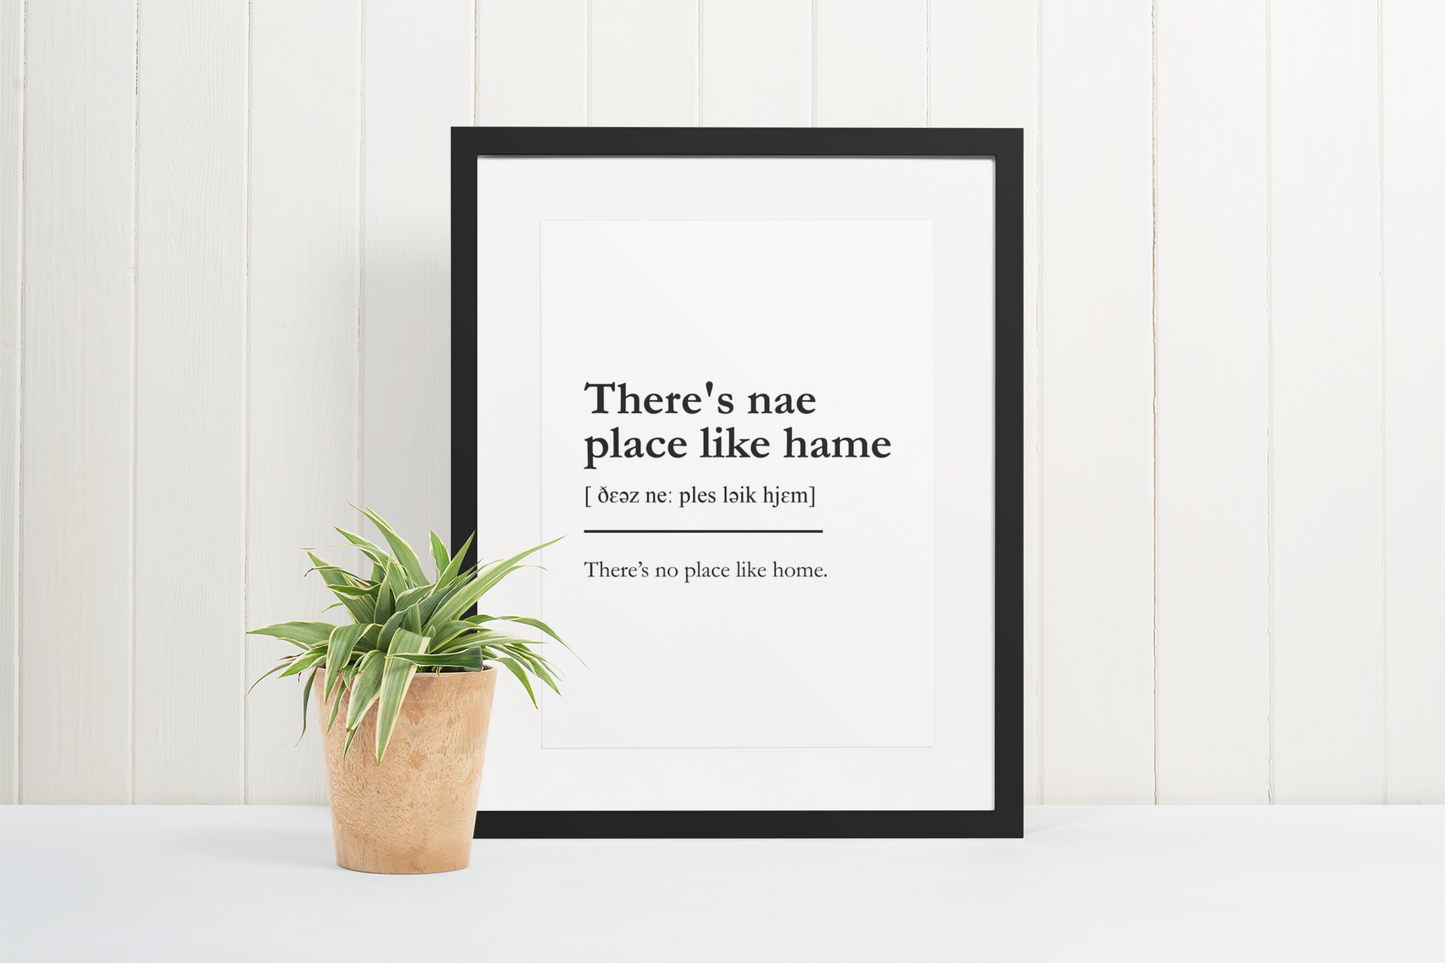 "There's nae place like hame" - Scottish Slang